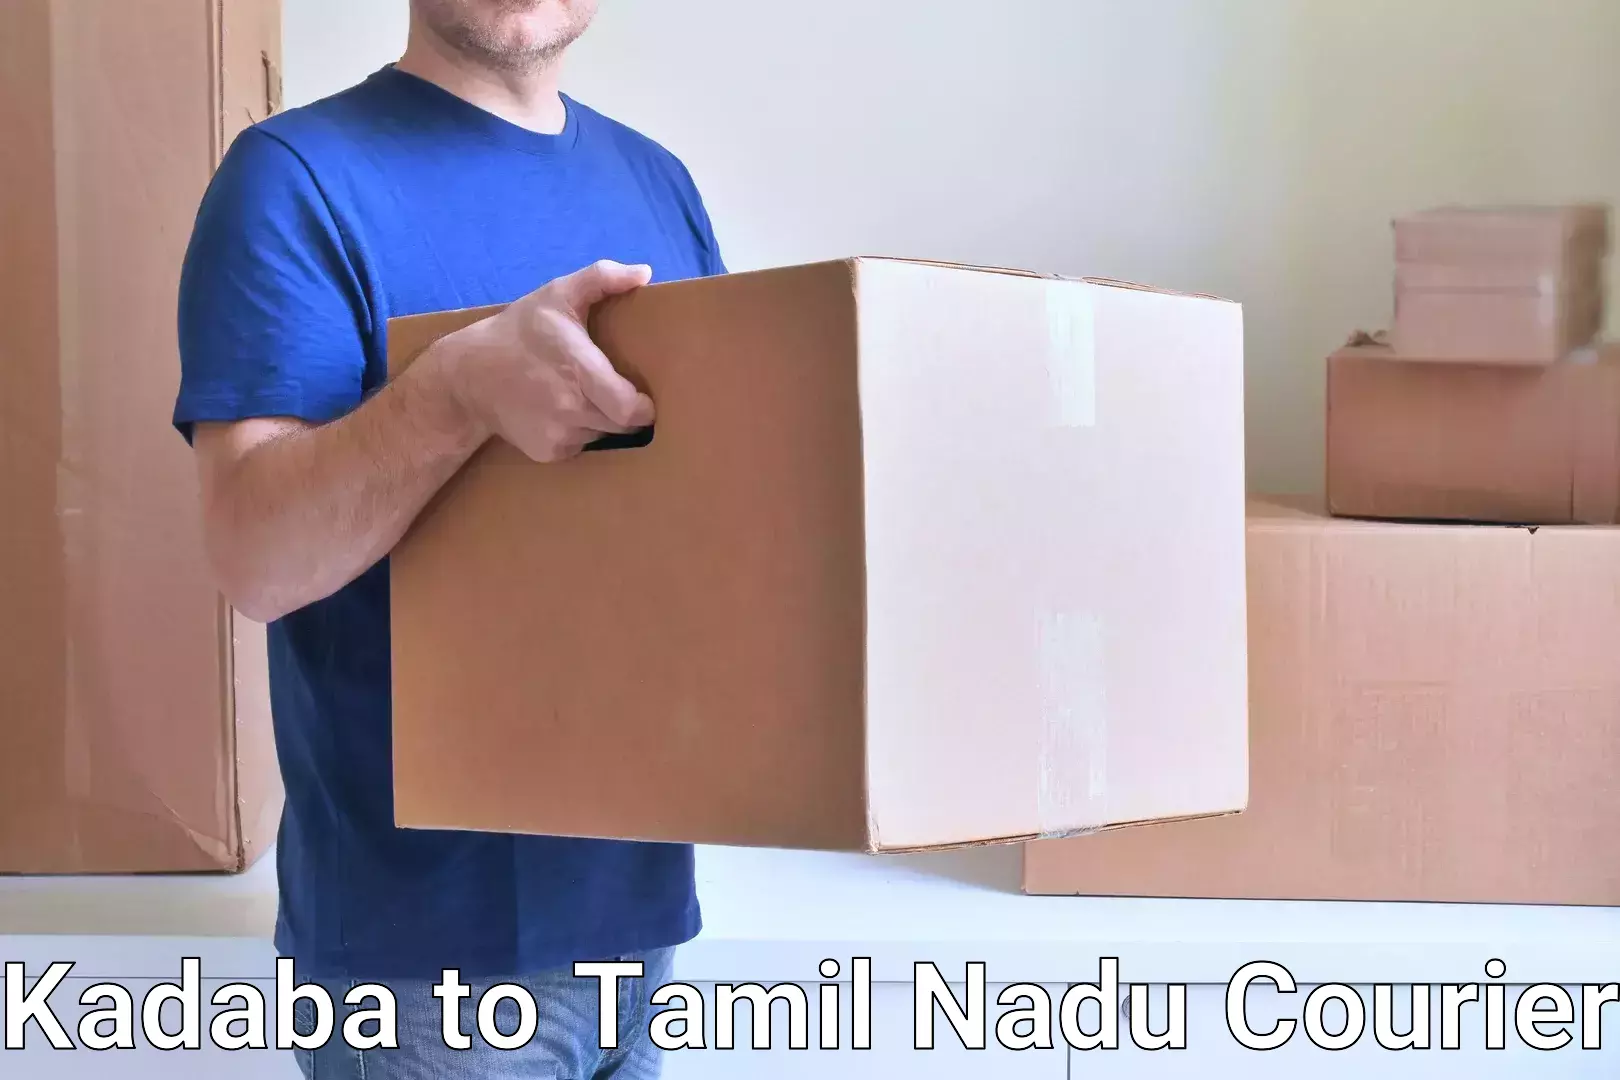 Affordable parcel service Kadaba to Chennai Port